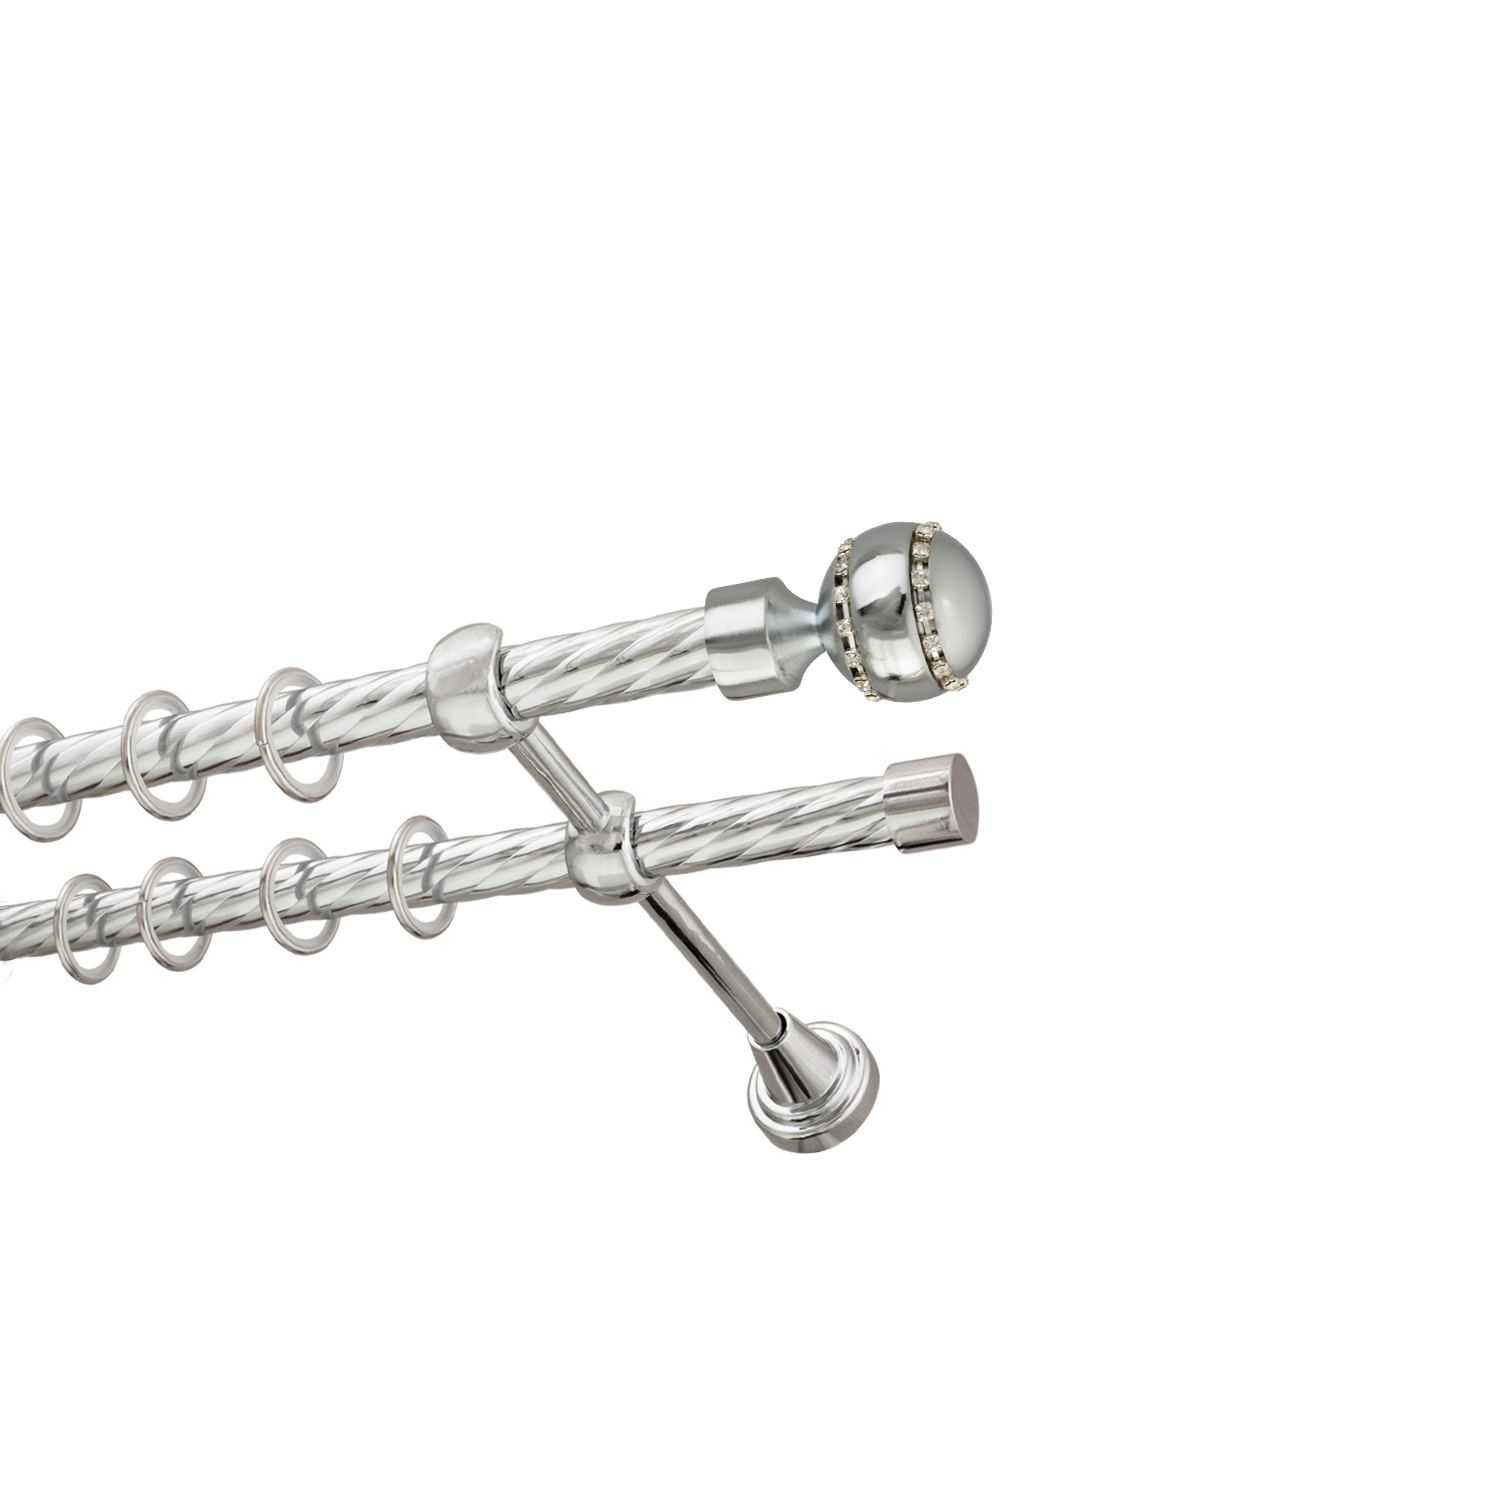 Металлический карниз для штор Модерн, двухрядный 16/16 мм, серебро, витая штанга, длина 180 см - фото Wikidecor.ru